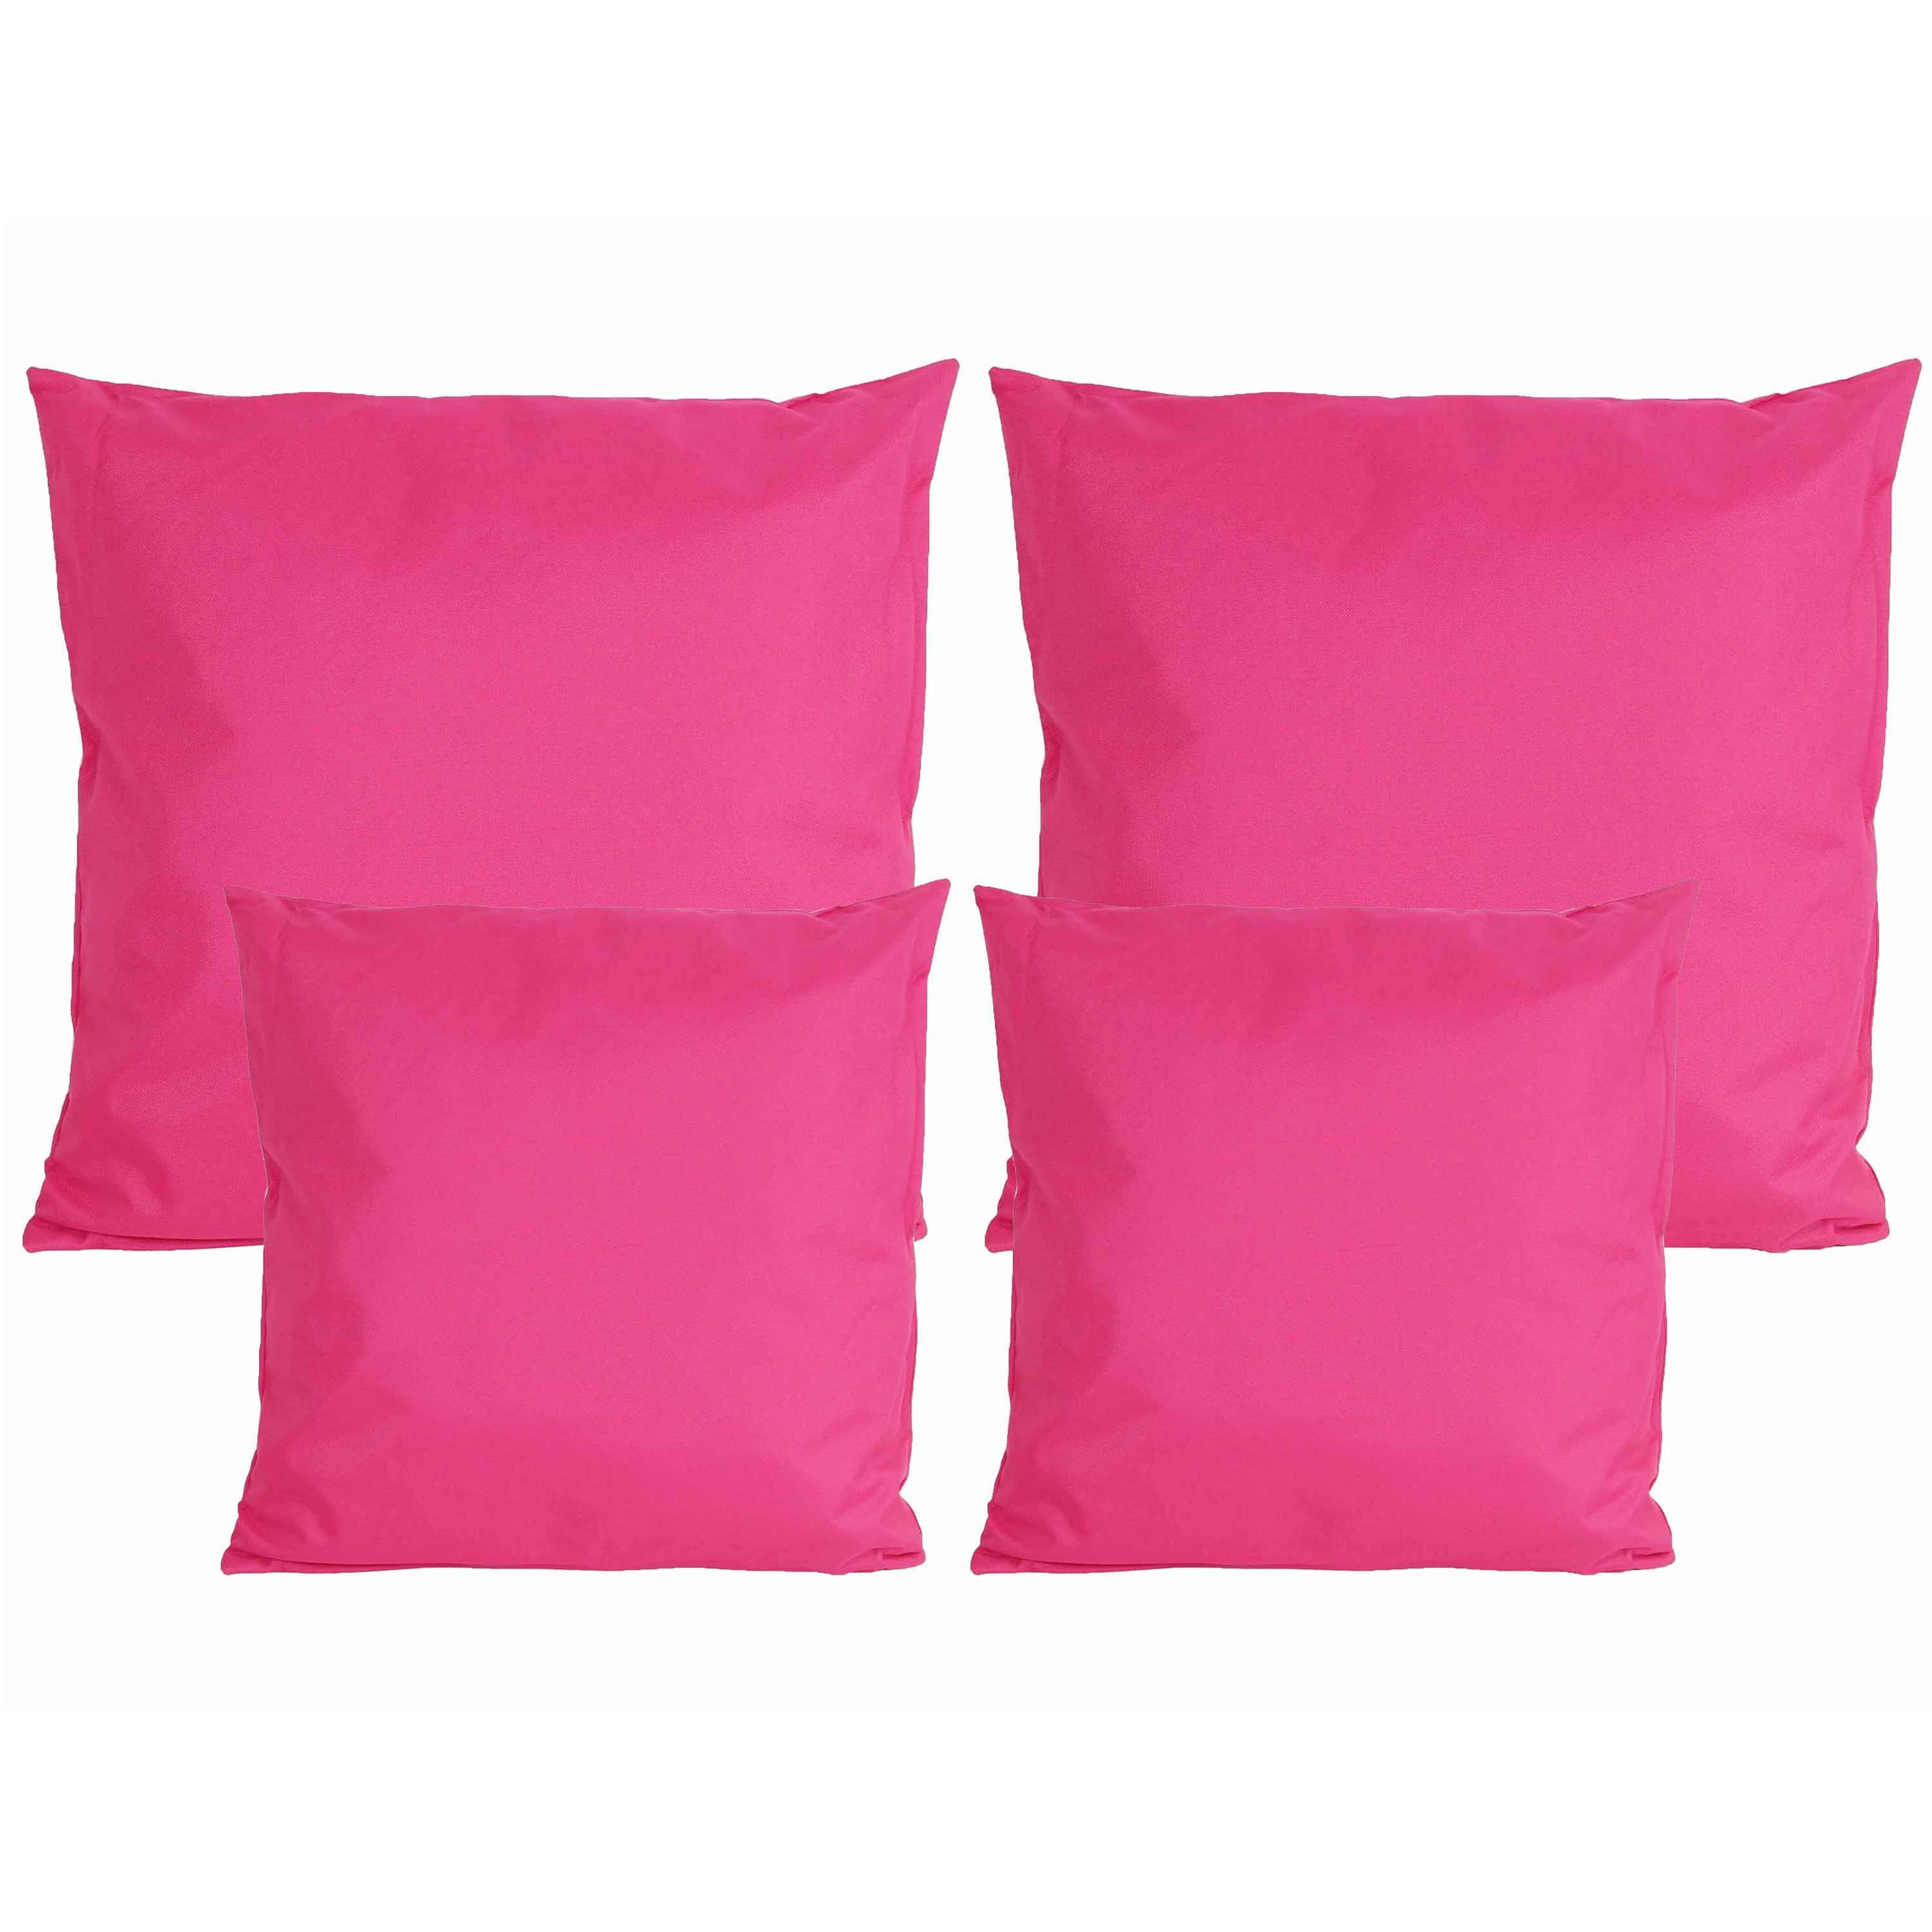 Bank-tuin kussens set binnen-buiten 4x stuks fuchsia roze In 2 formaten